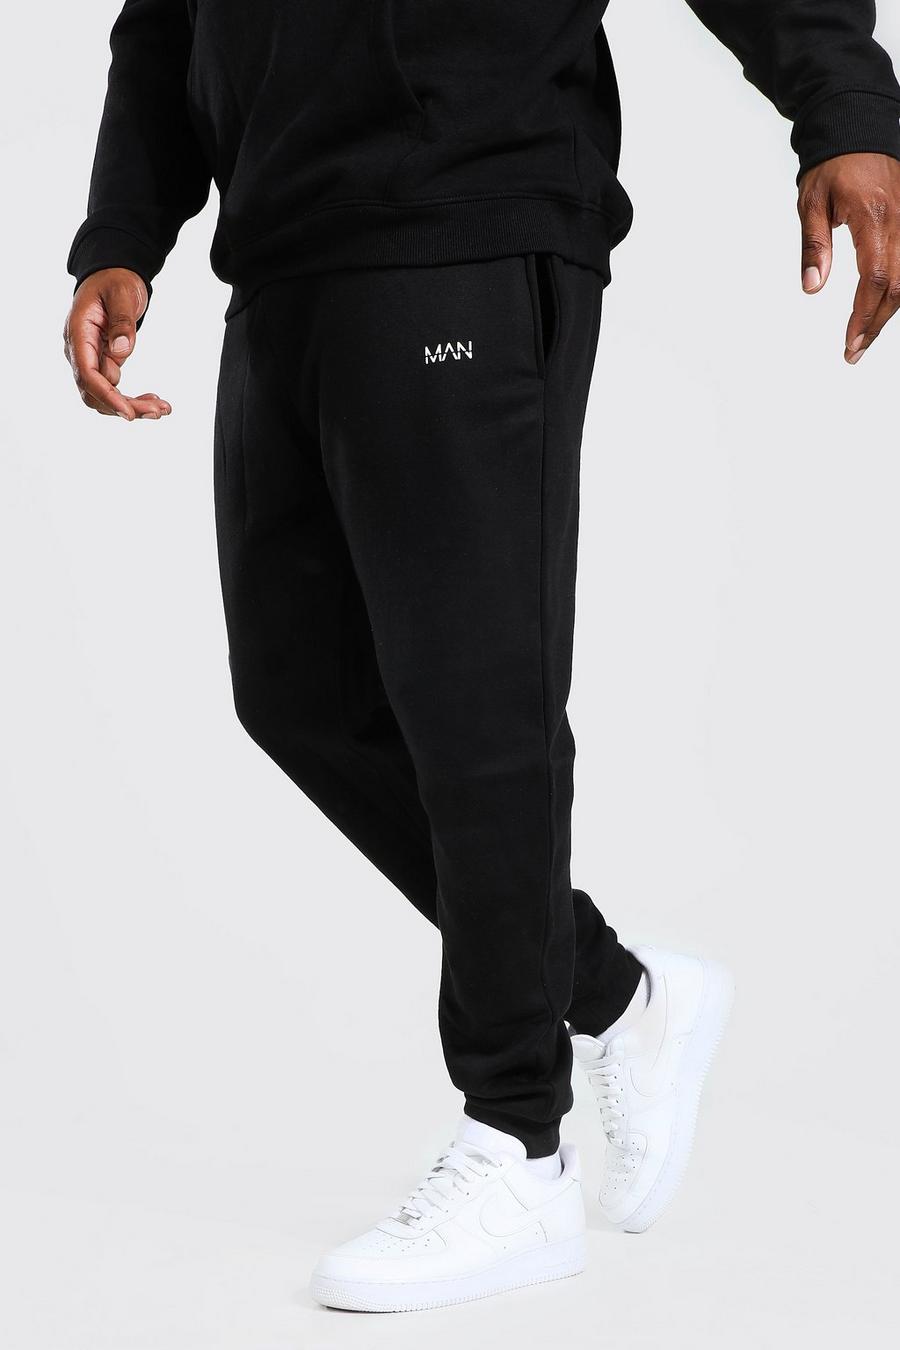 Pantalón deportivo Plus MAN ajustado reciclado, Black negro